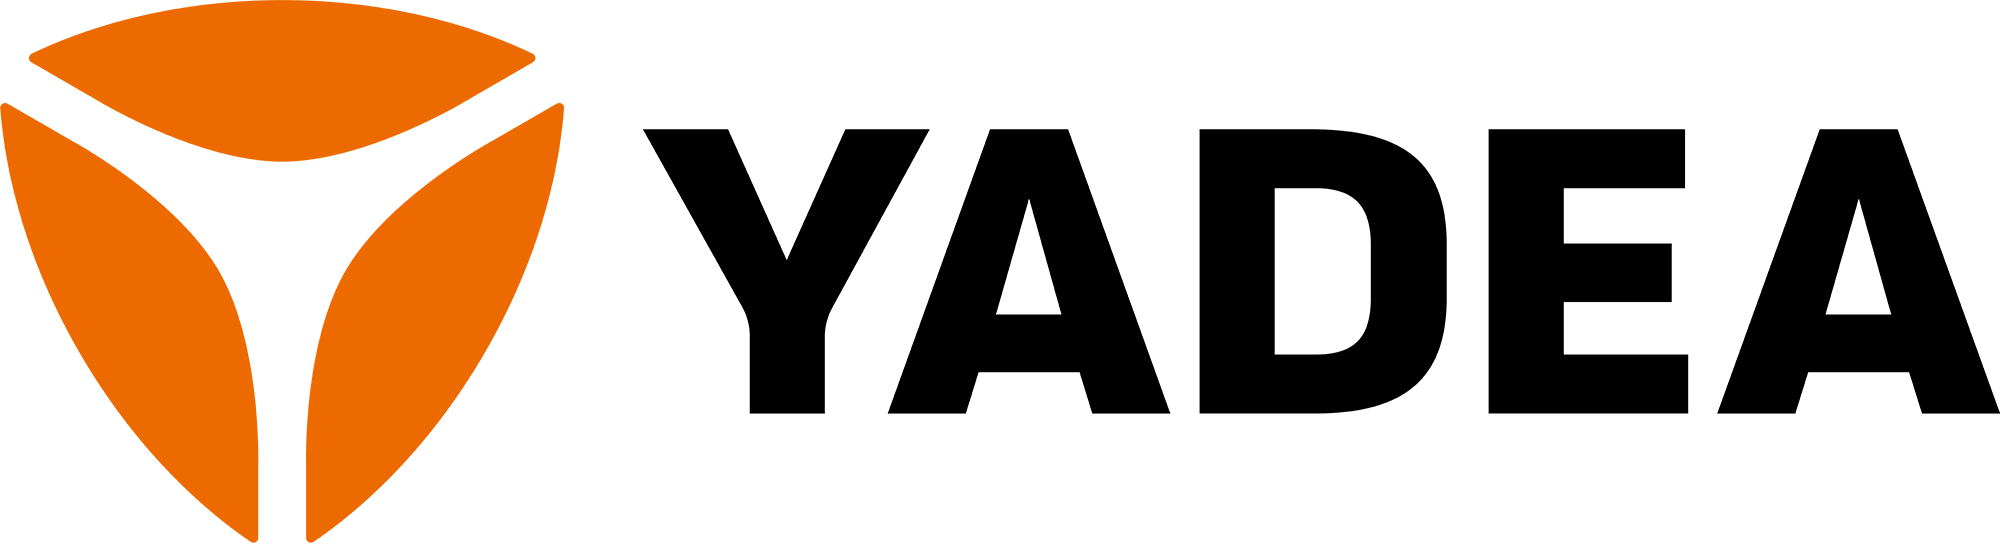 yadea-logo Rock-e-Roller - Marken